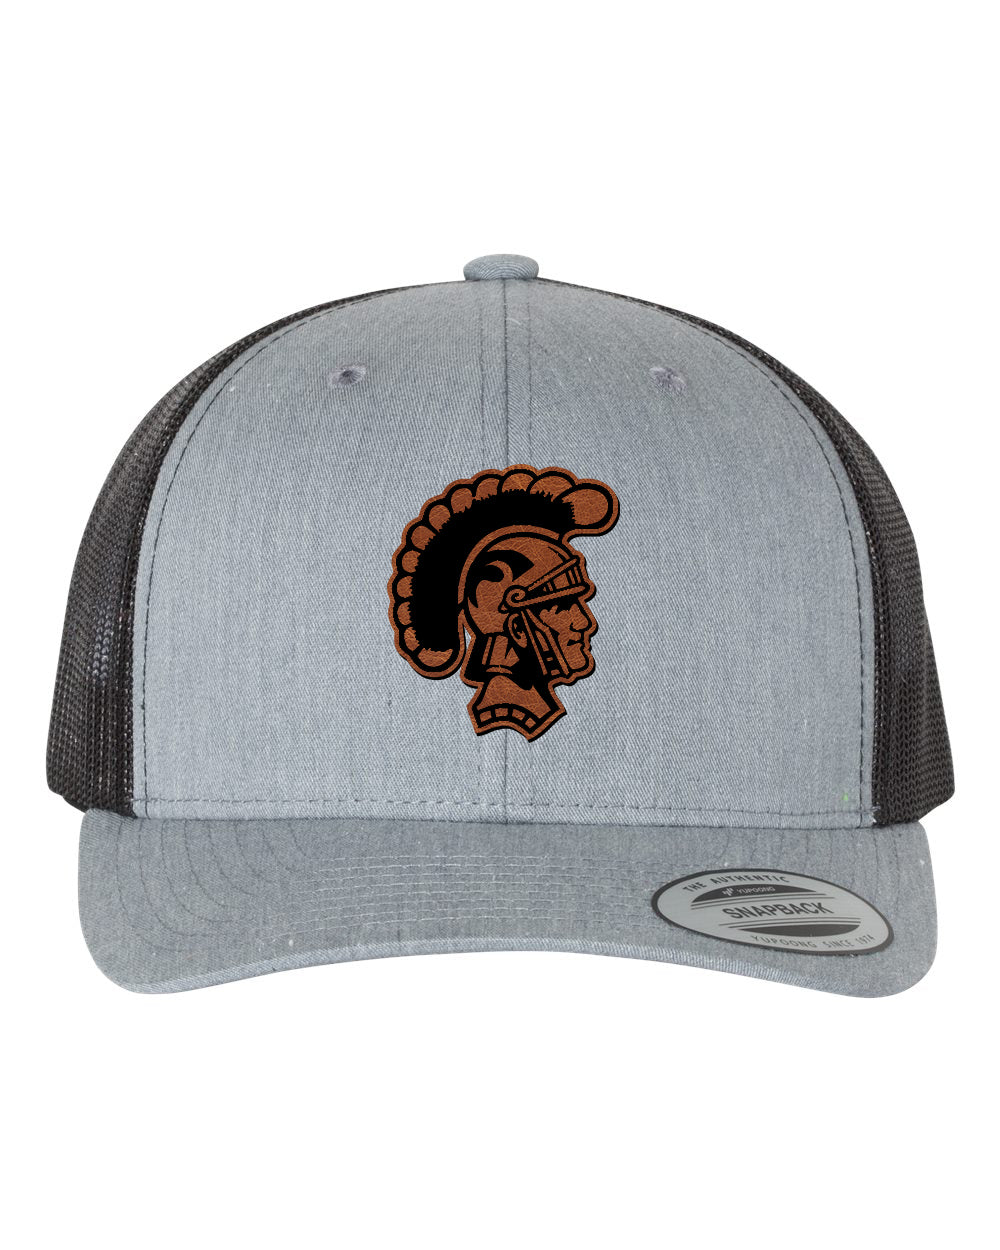 Madison Trojans Leather Patch Hat